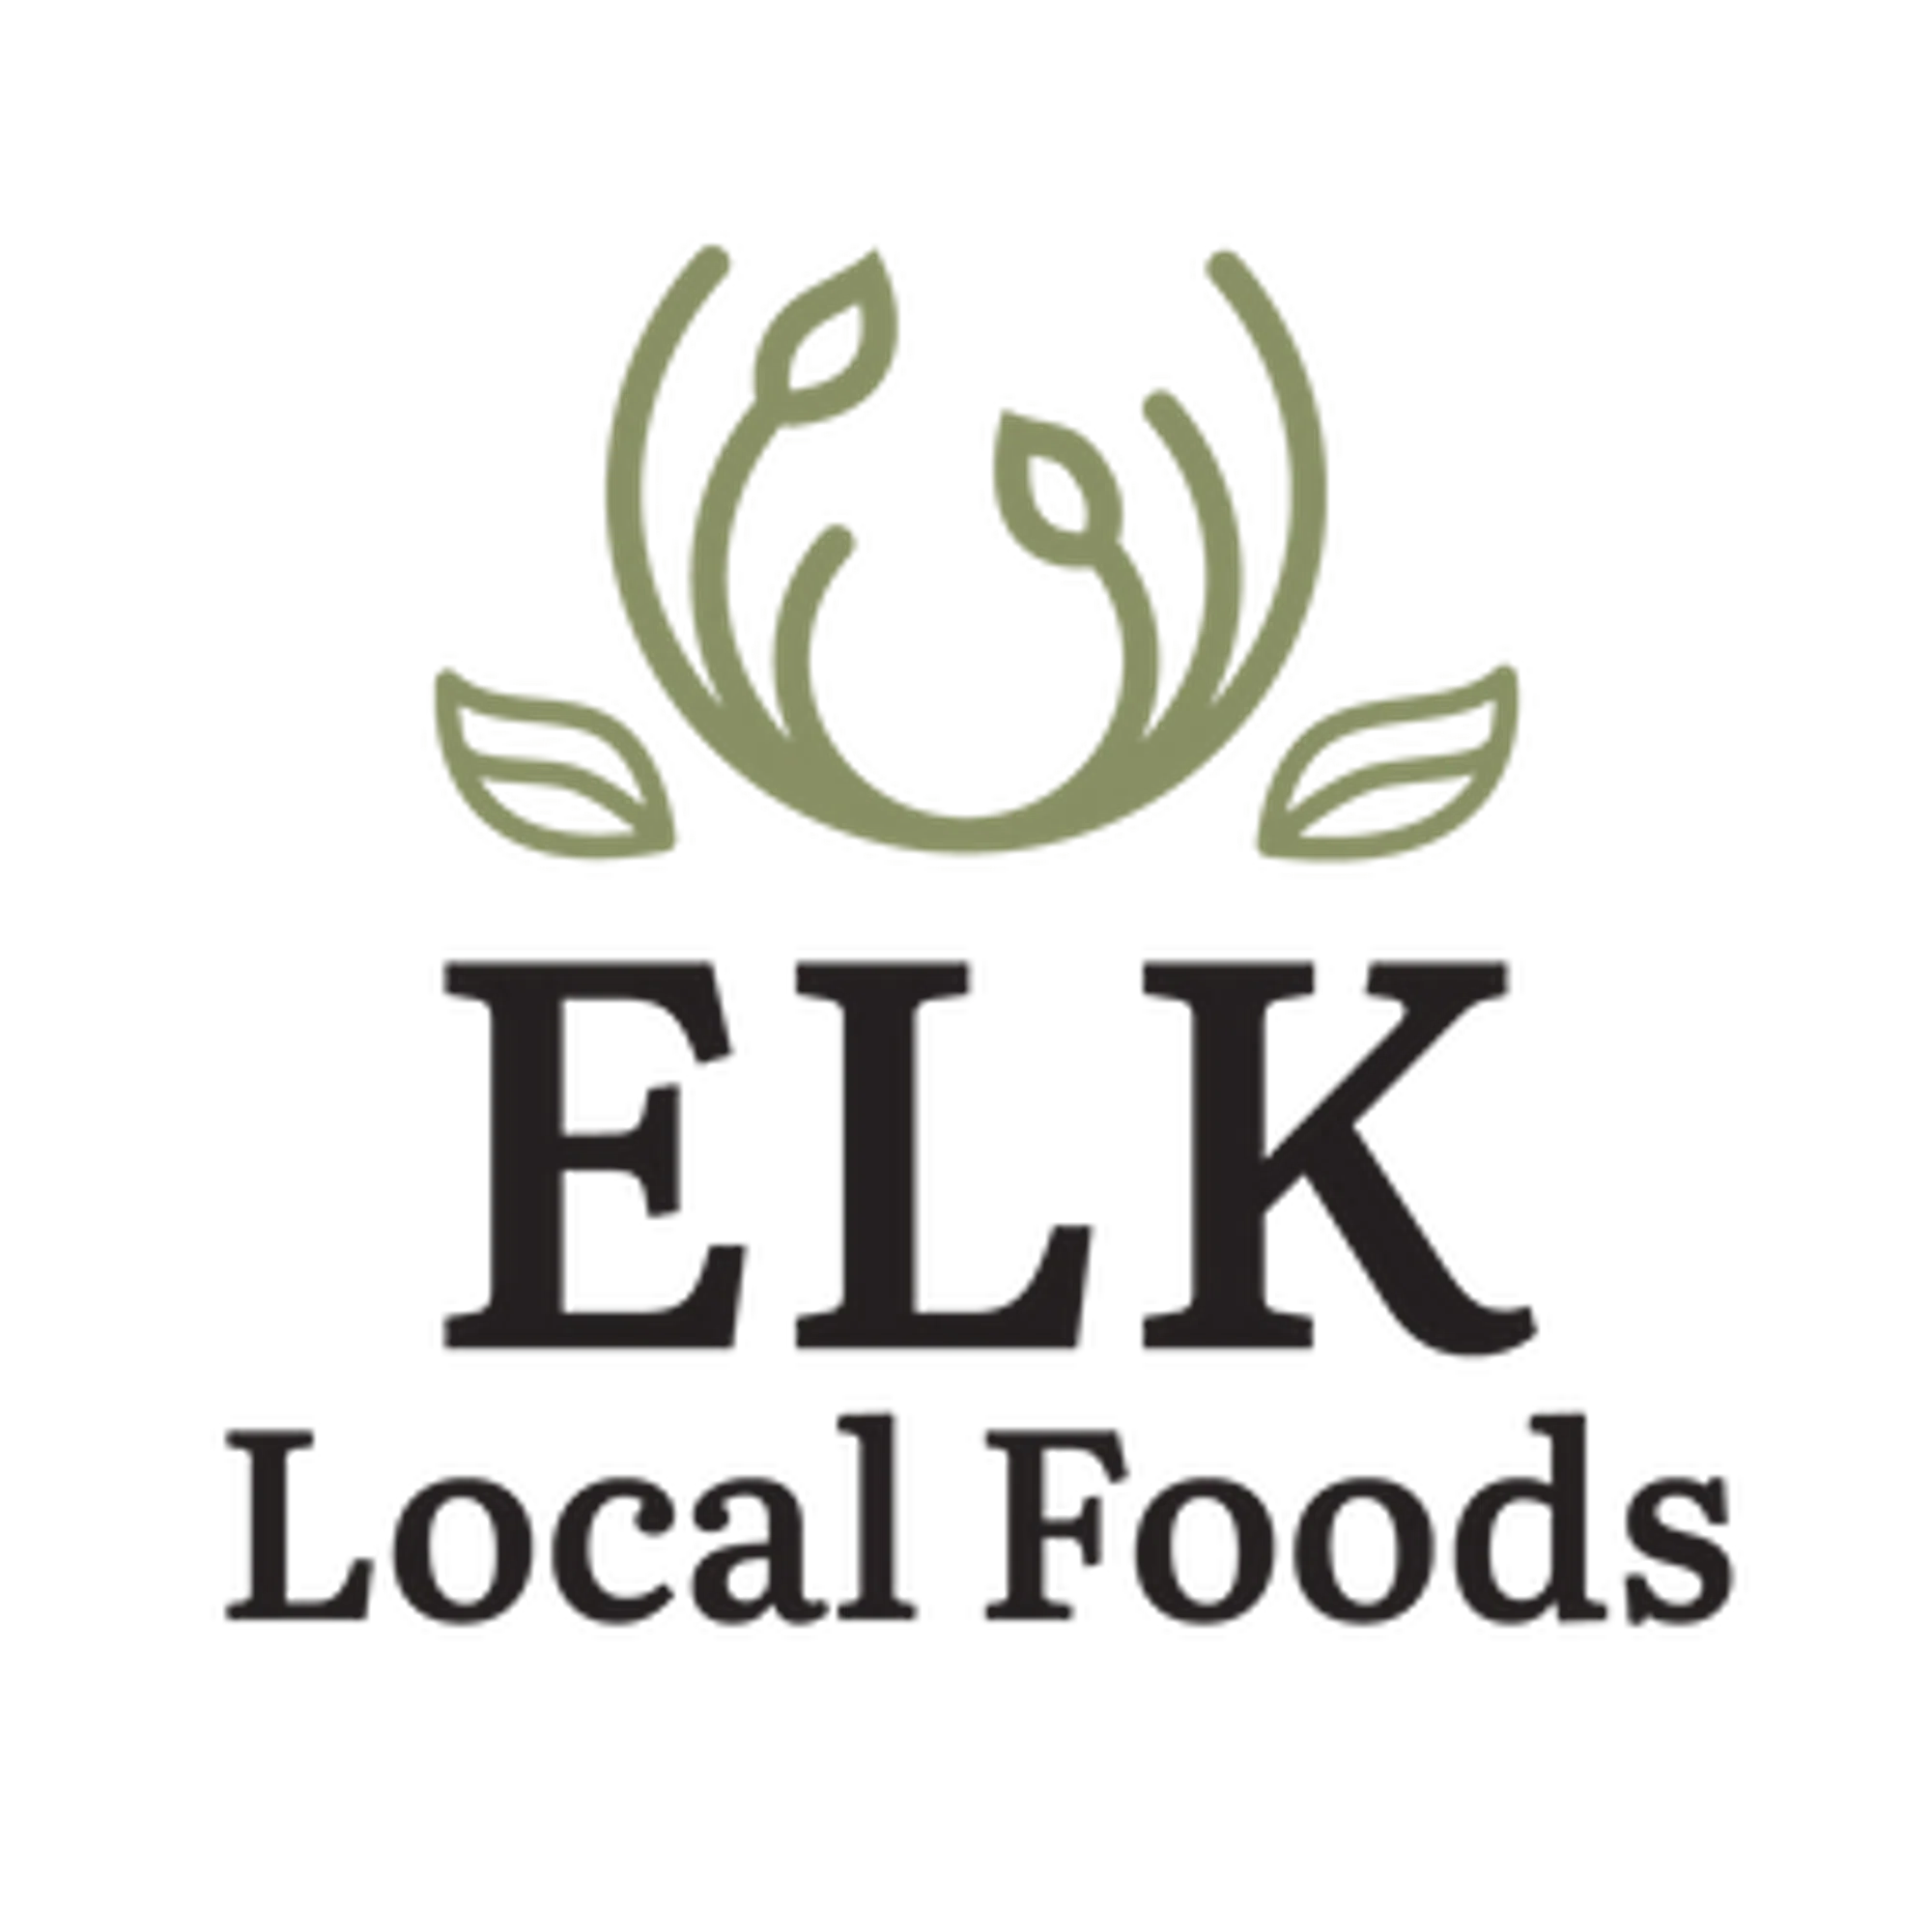 ELK Local Foods